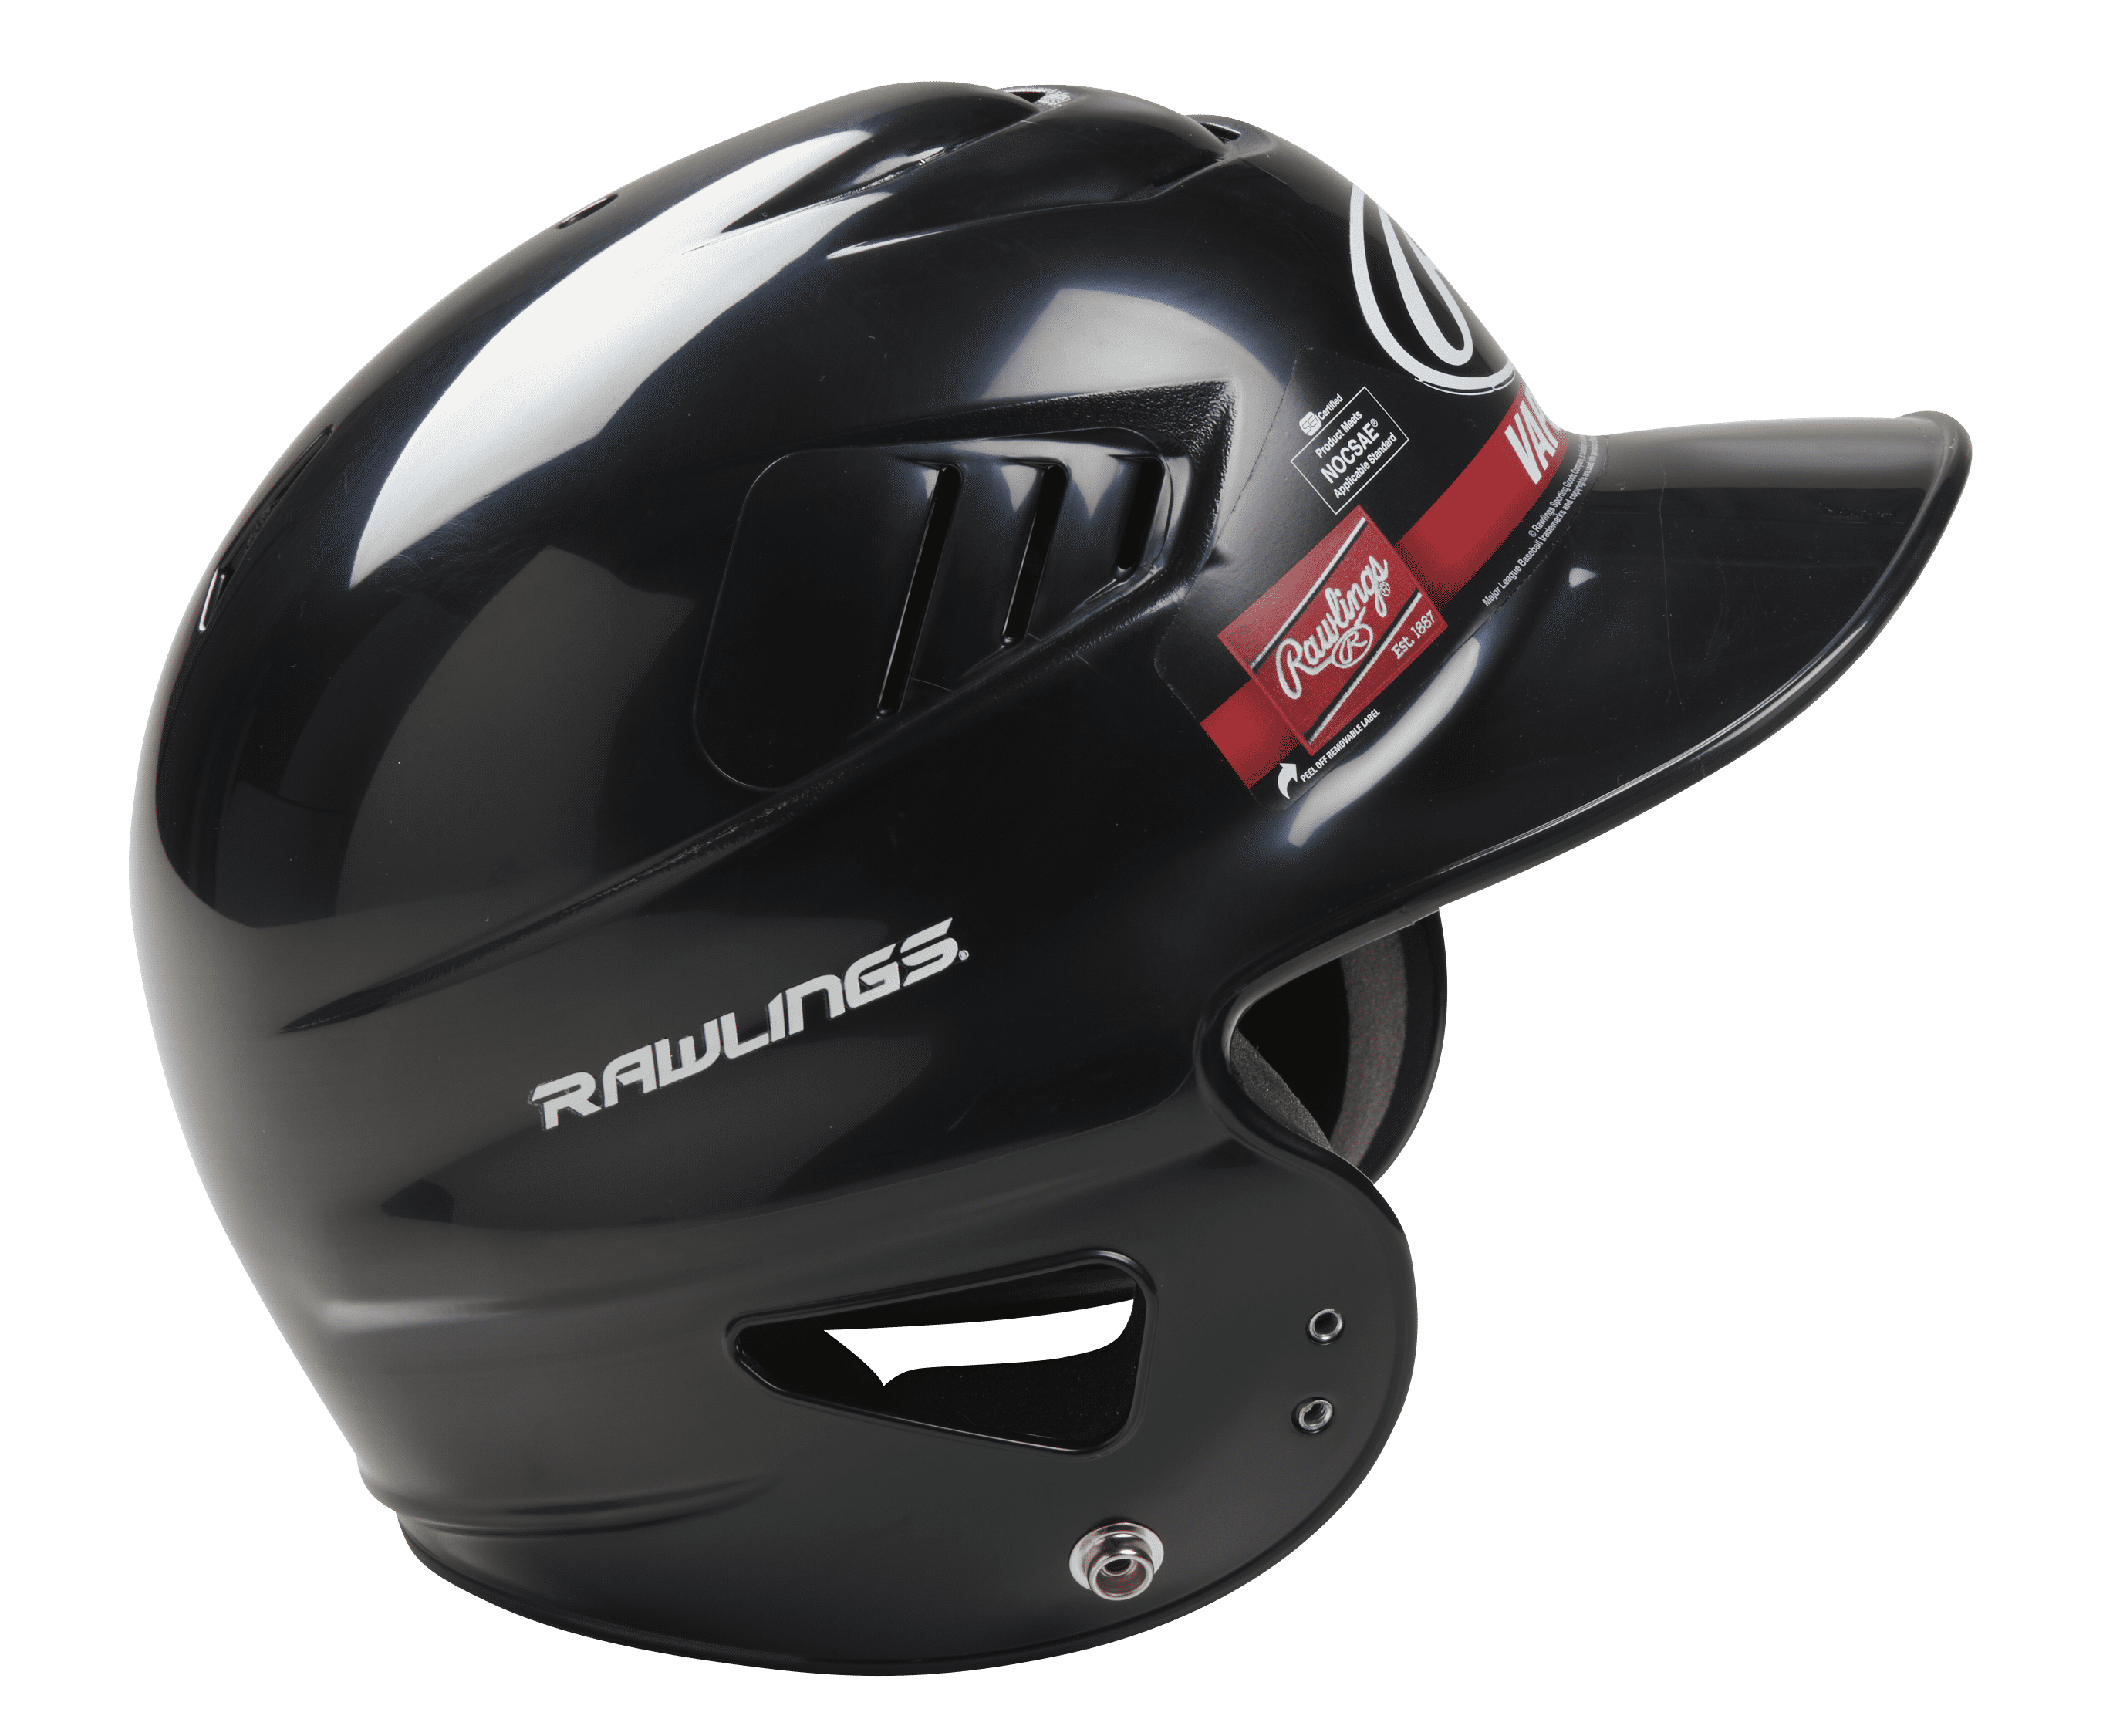 RAWLINGS VAPOR  coolflo baseball softball BLACK Batting Helmet Fits 6.5 to 7.5 